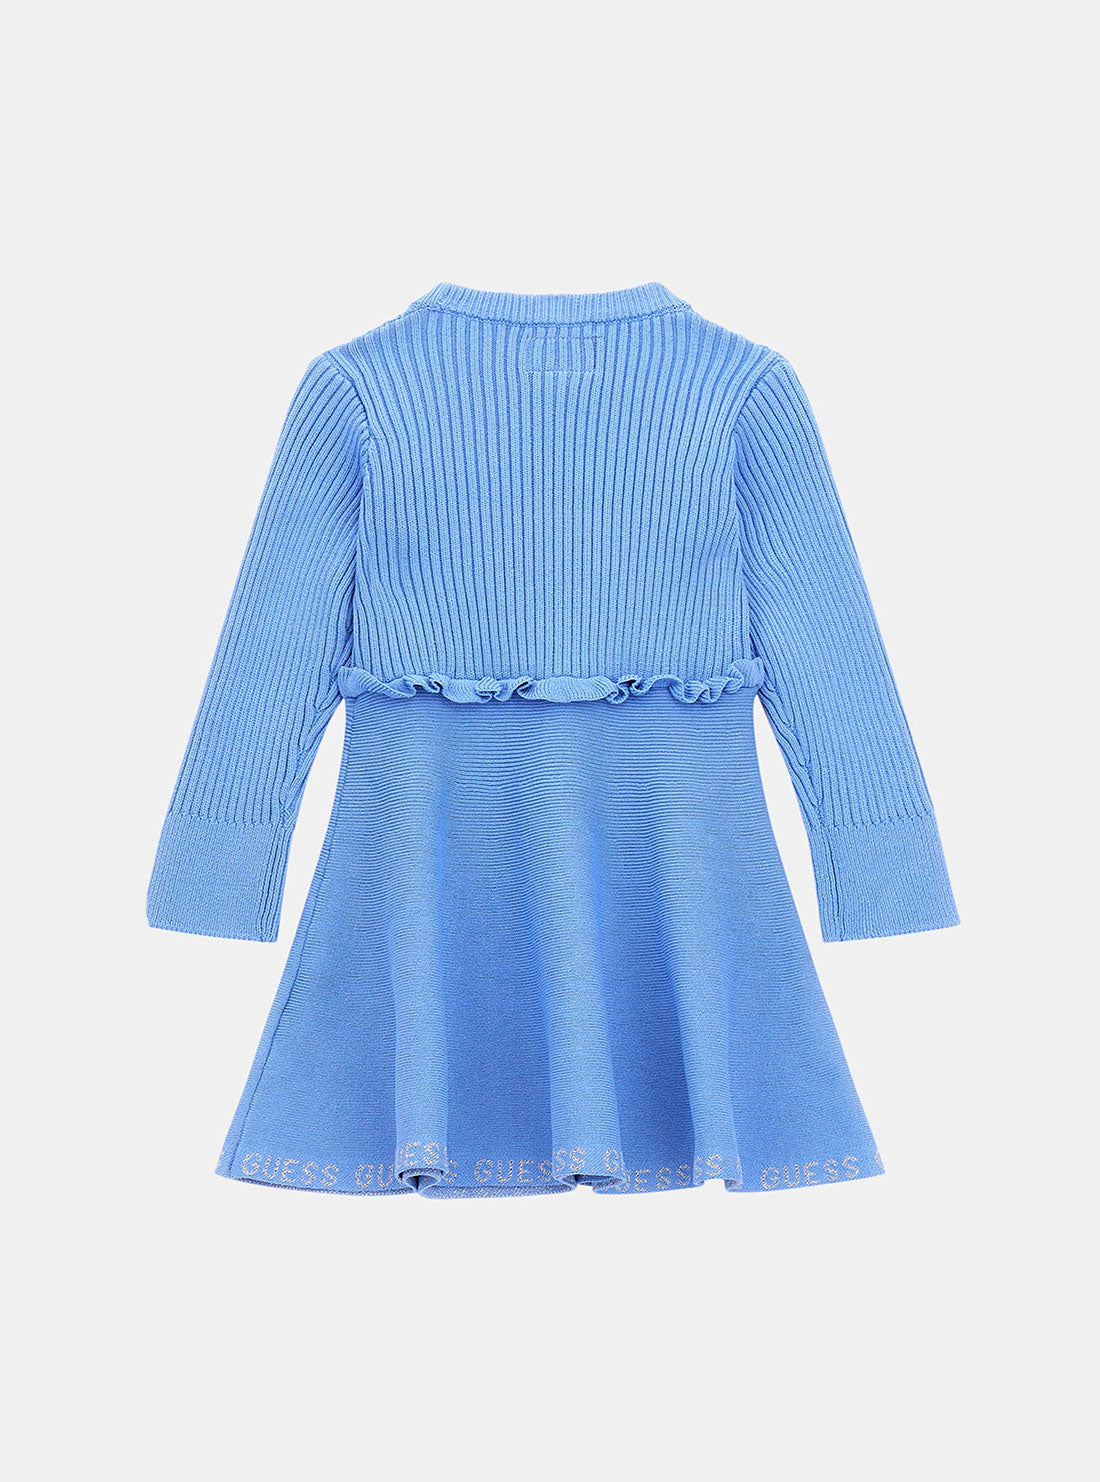 GUESS Blue Long Sleeve Knit Dress (2-7) back view